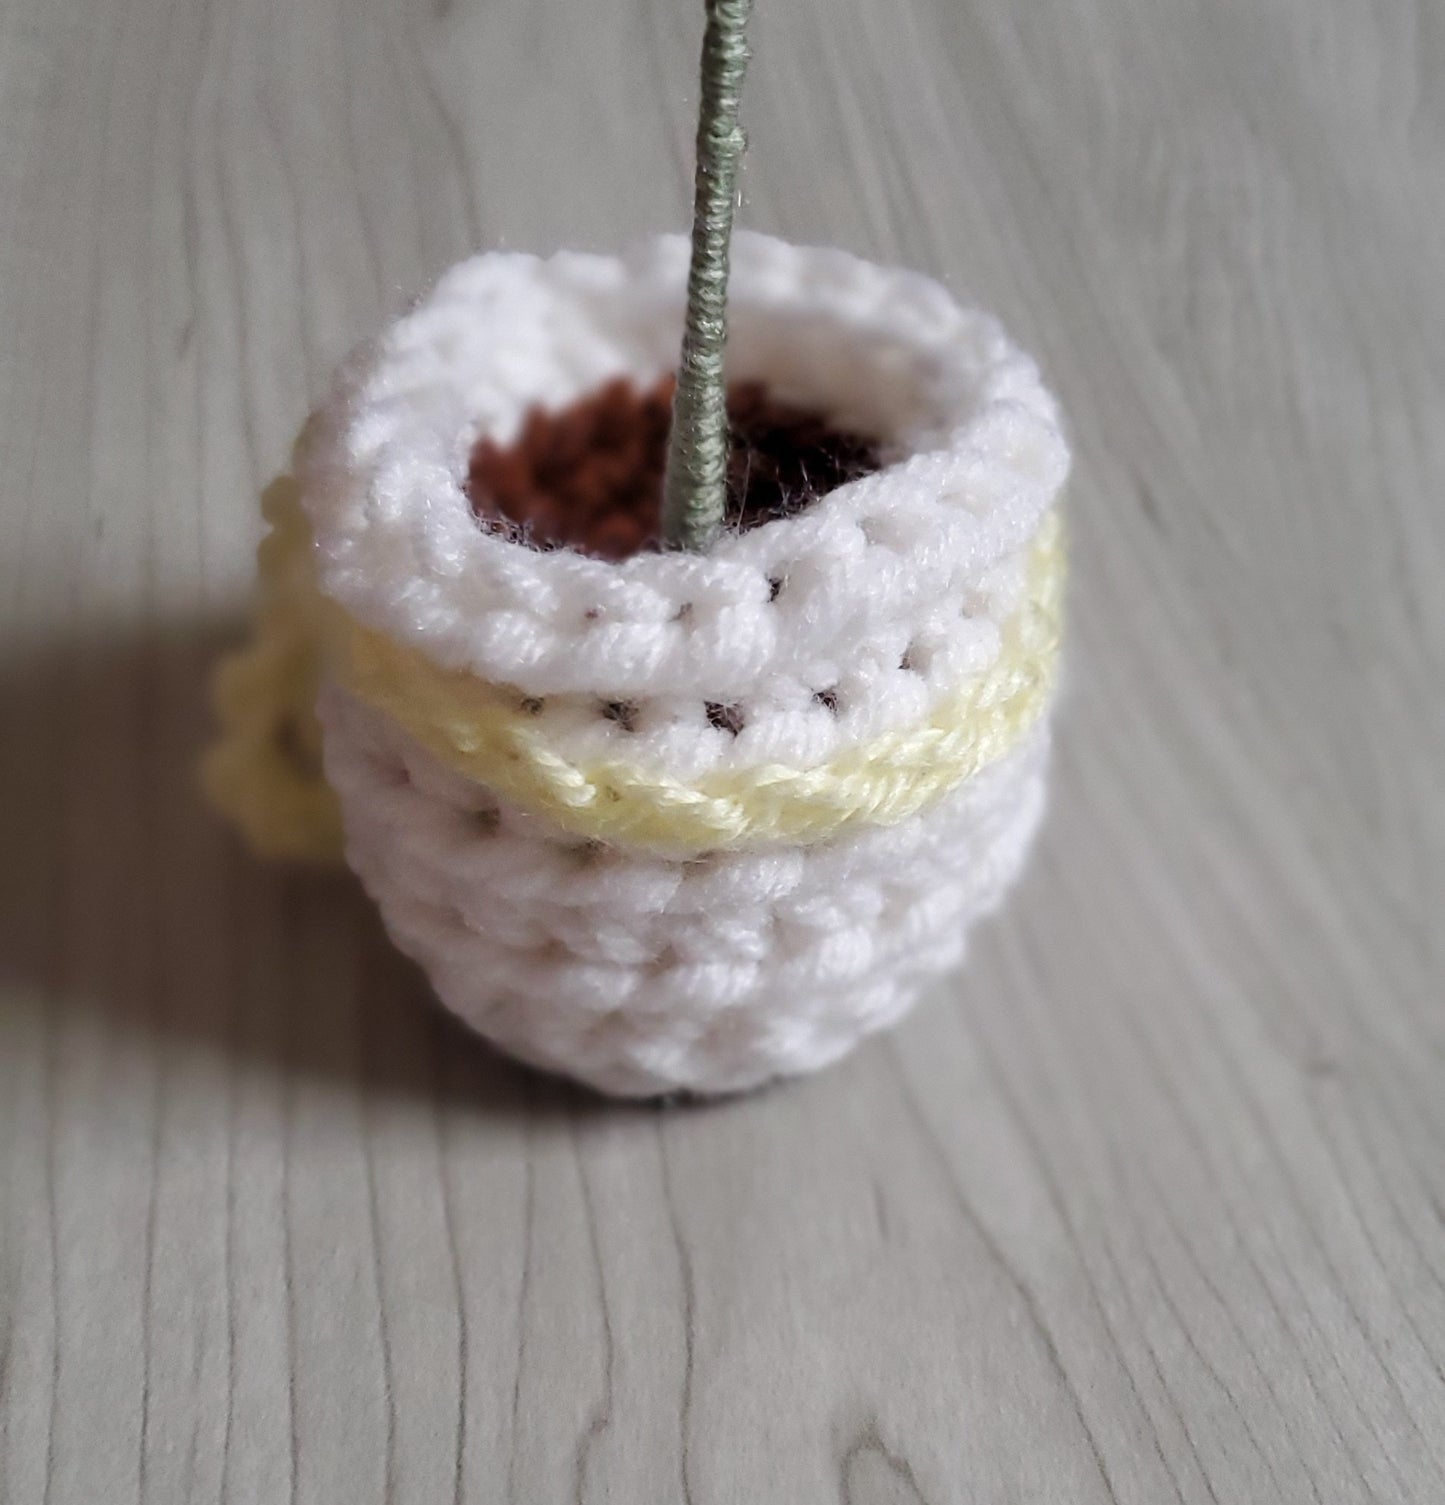 Original Crochet Potted Flower